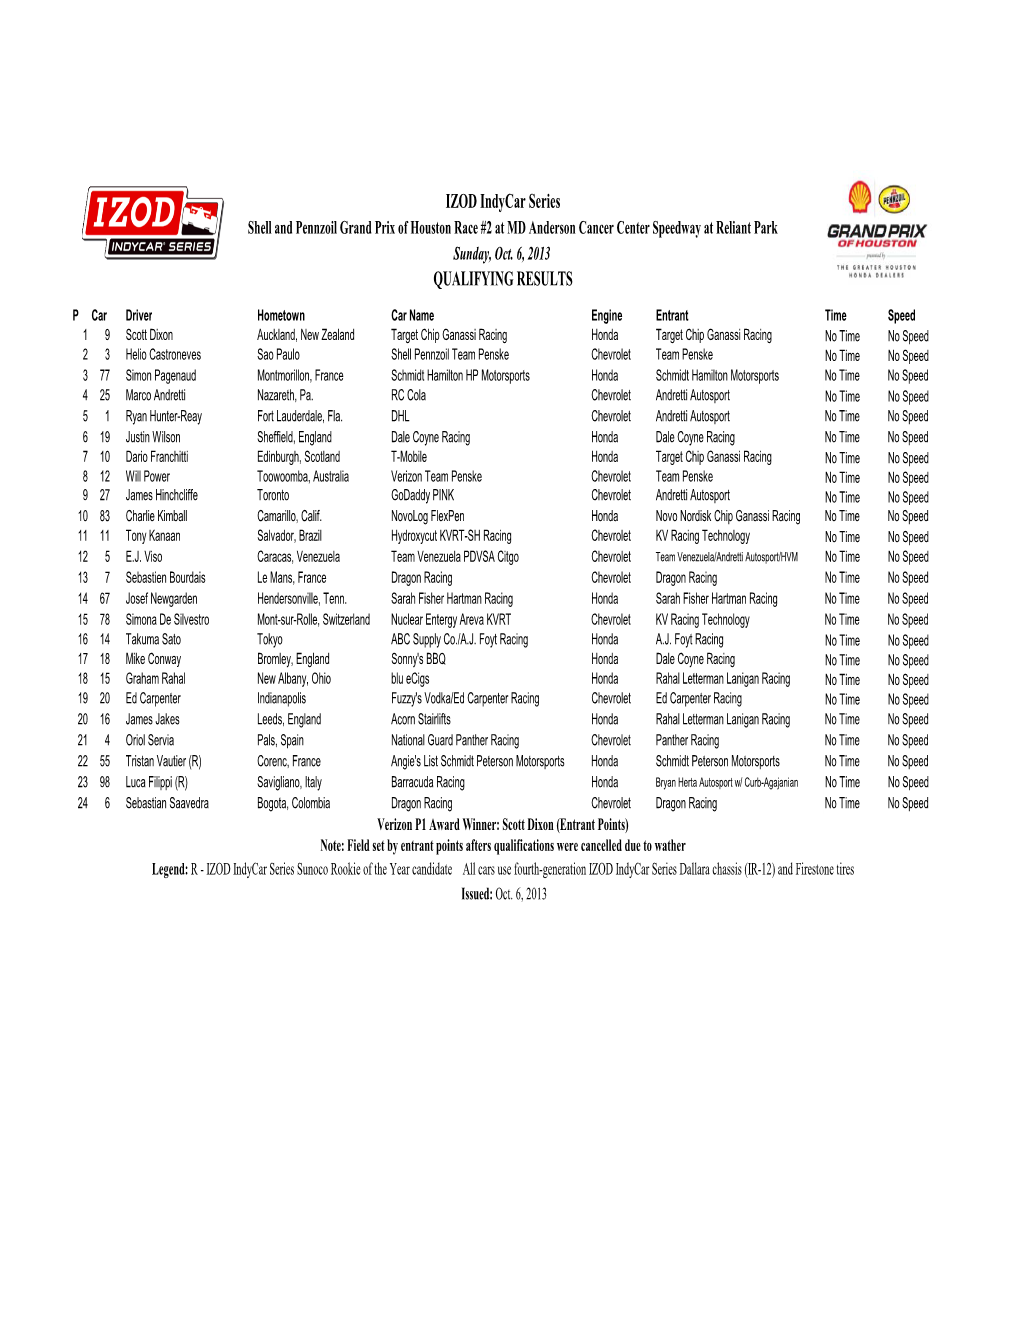 Grand Prix of Baltimore Qual Results 2